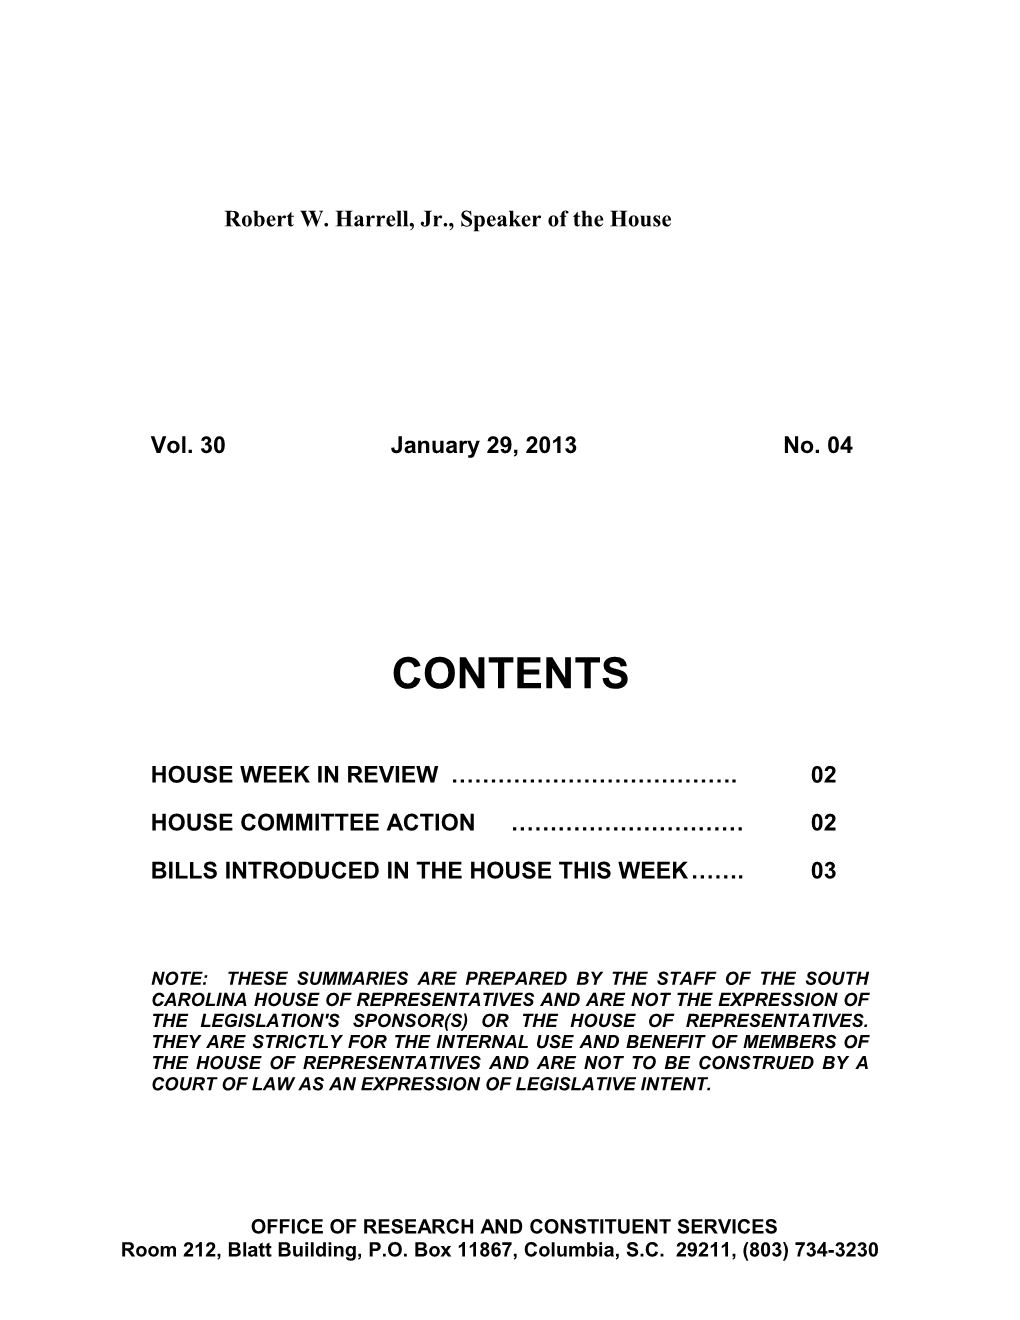 Legislative Update - Vol. 30 No. 04 January 29, 2013 - South Carolina Legislature Online